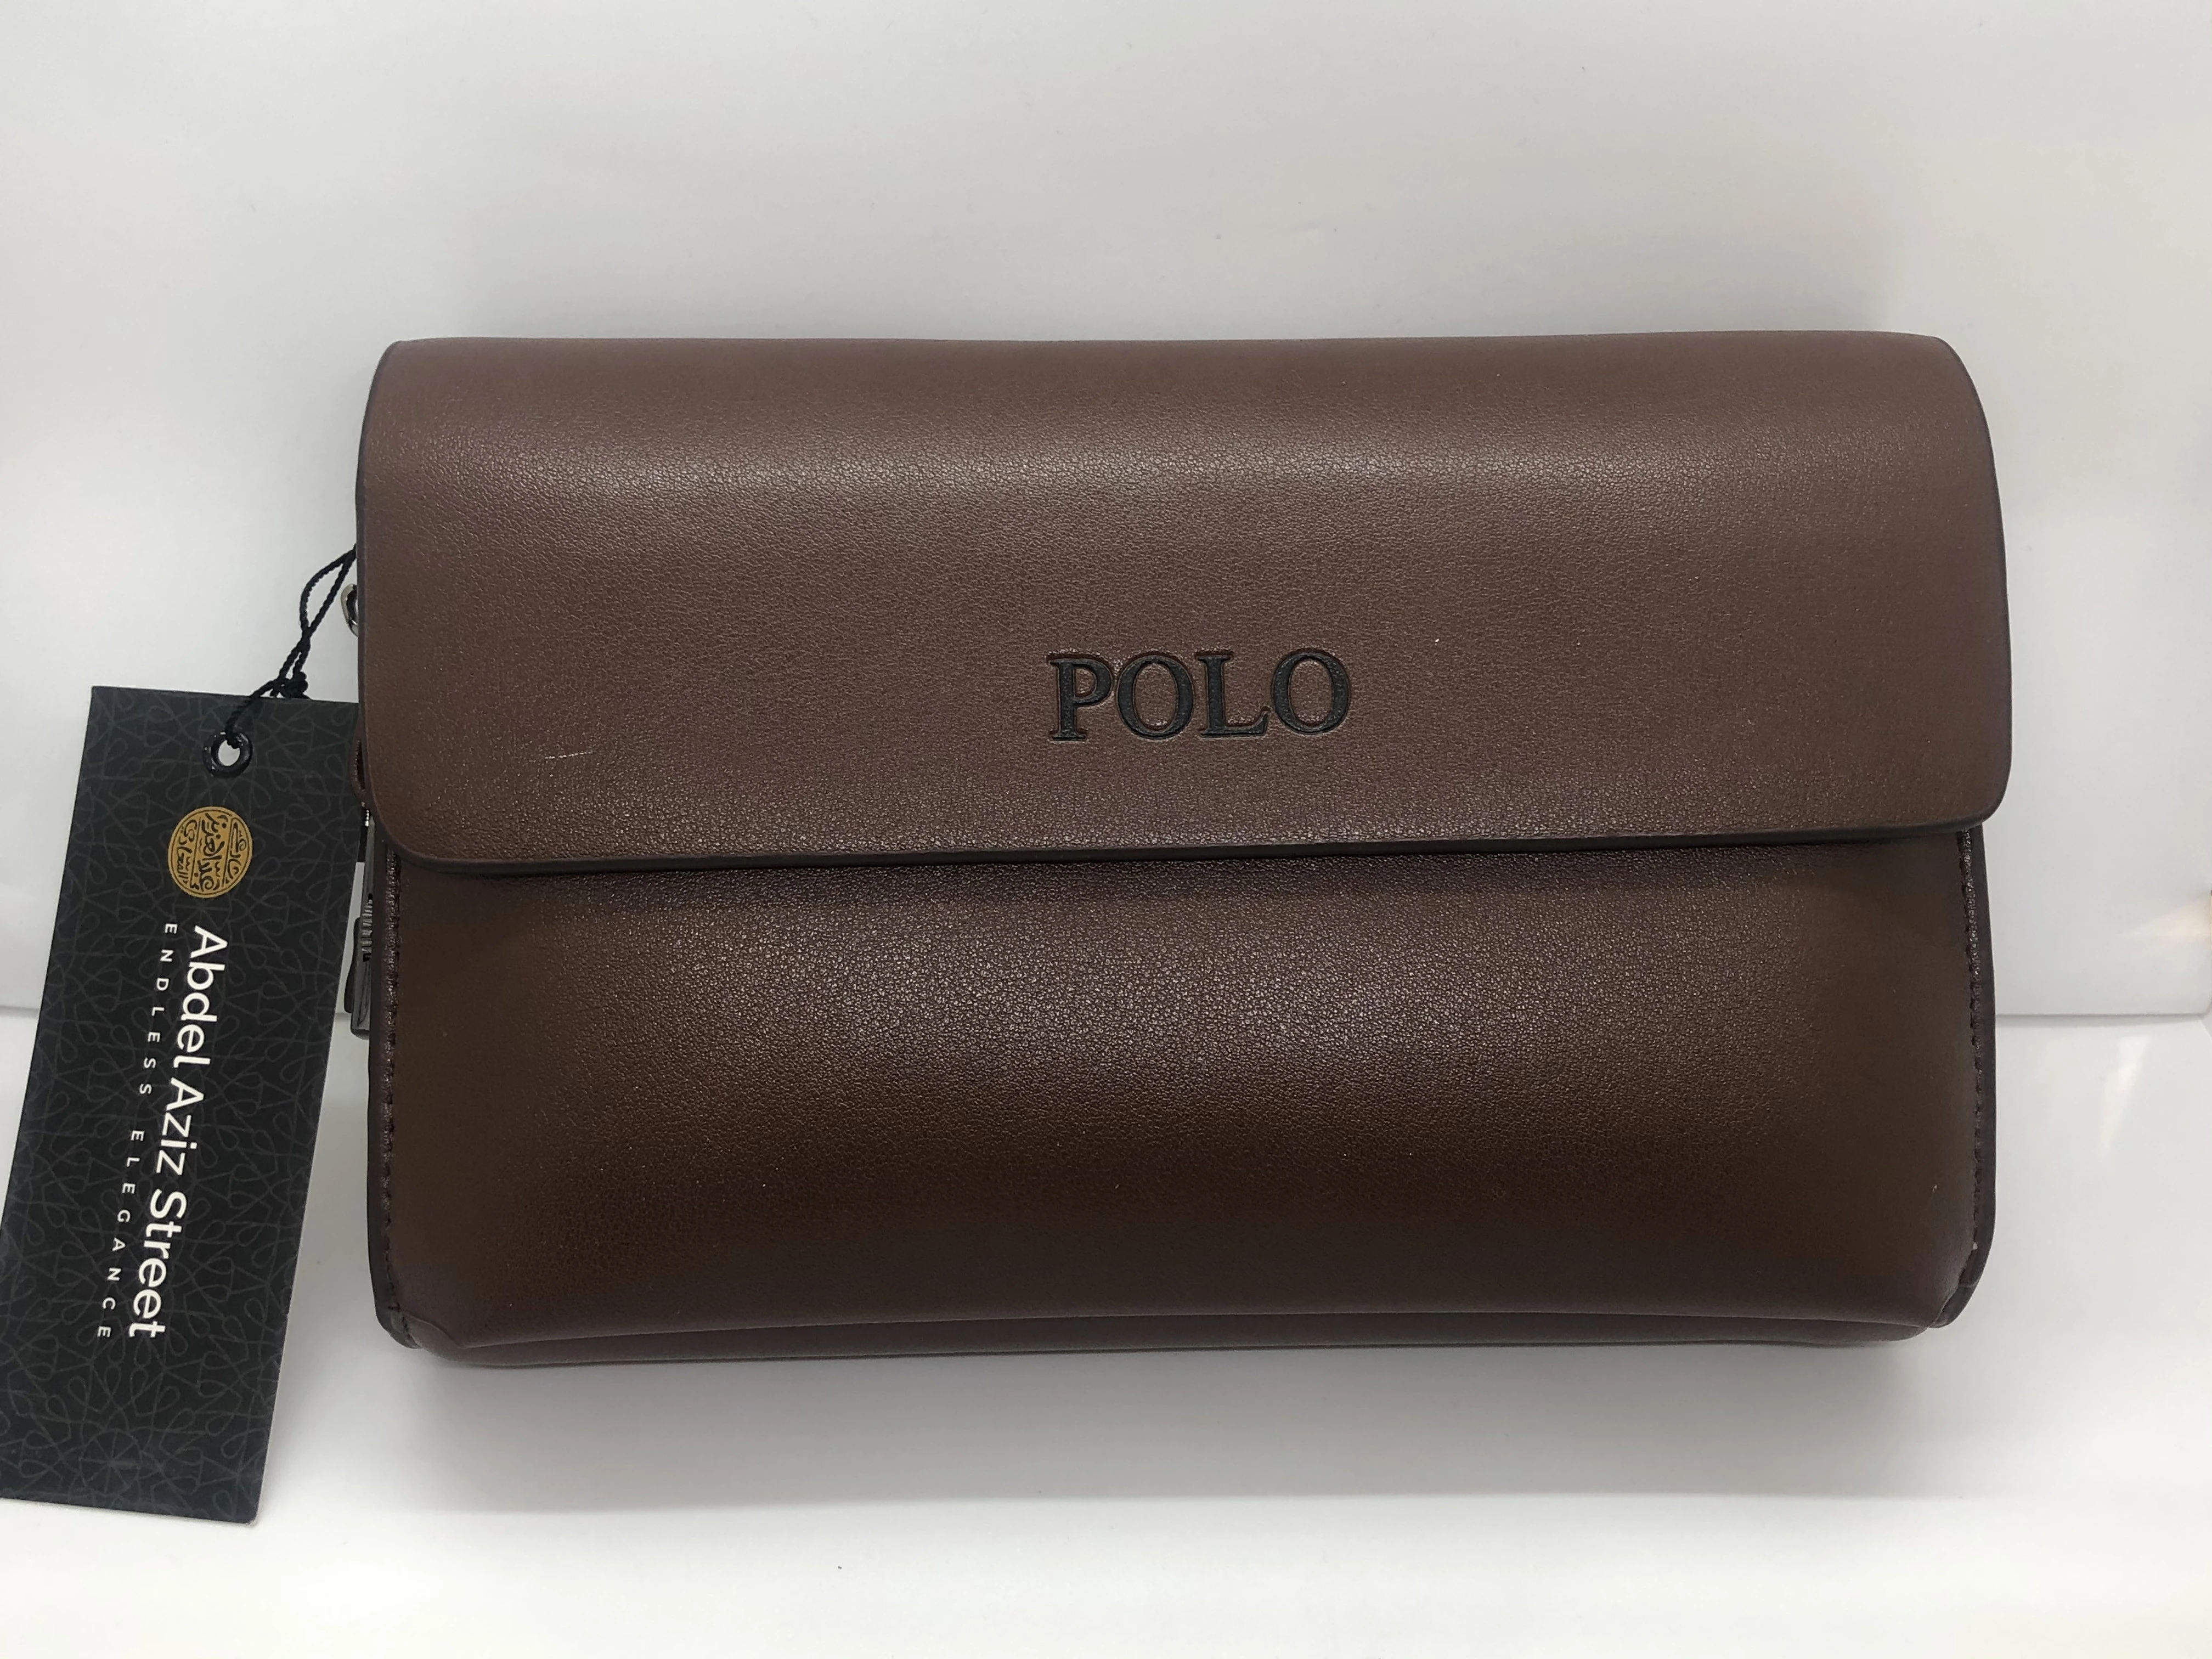 Leather polo handbags in dark brown color